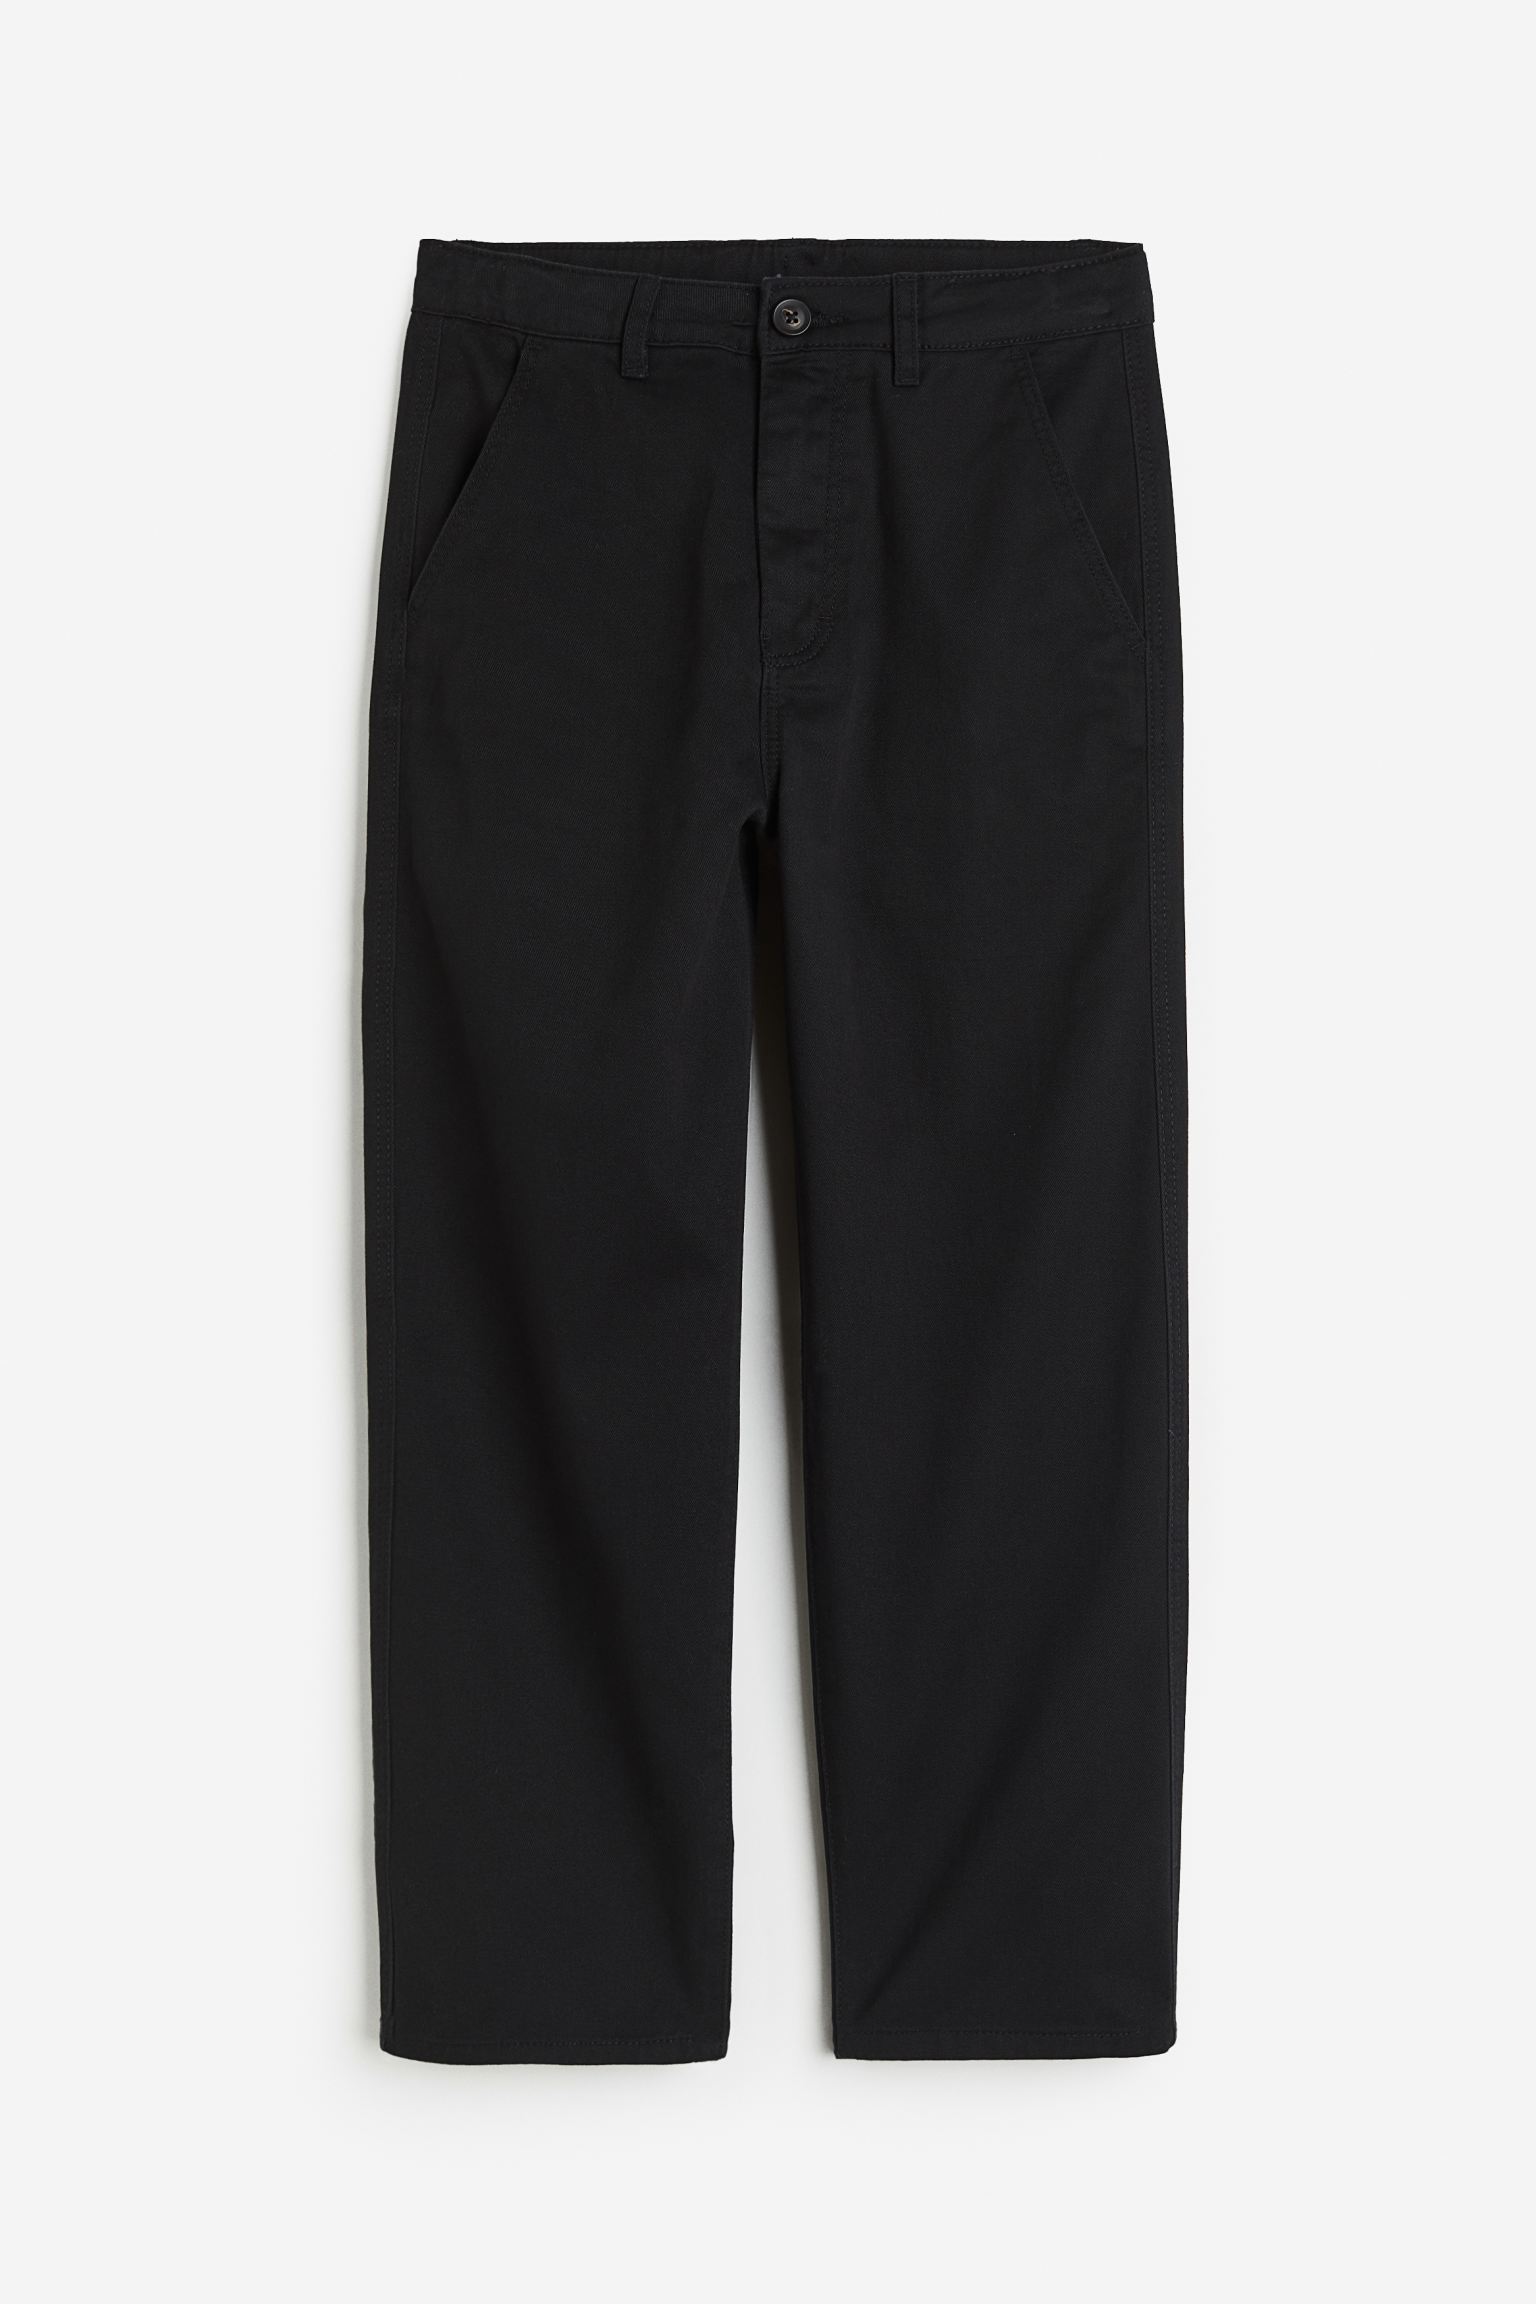 Брюки H&M Relaxed, черный брюки чинос из твила button blue